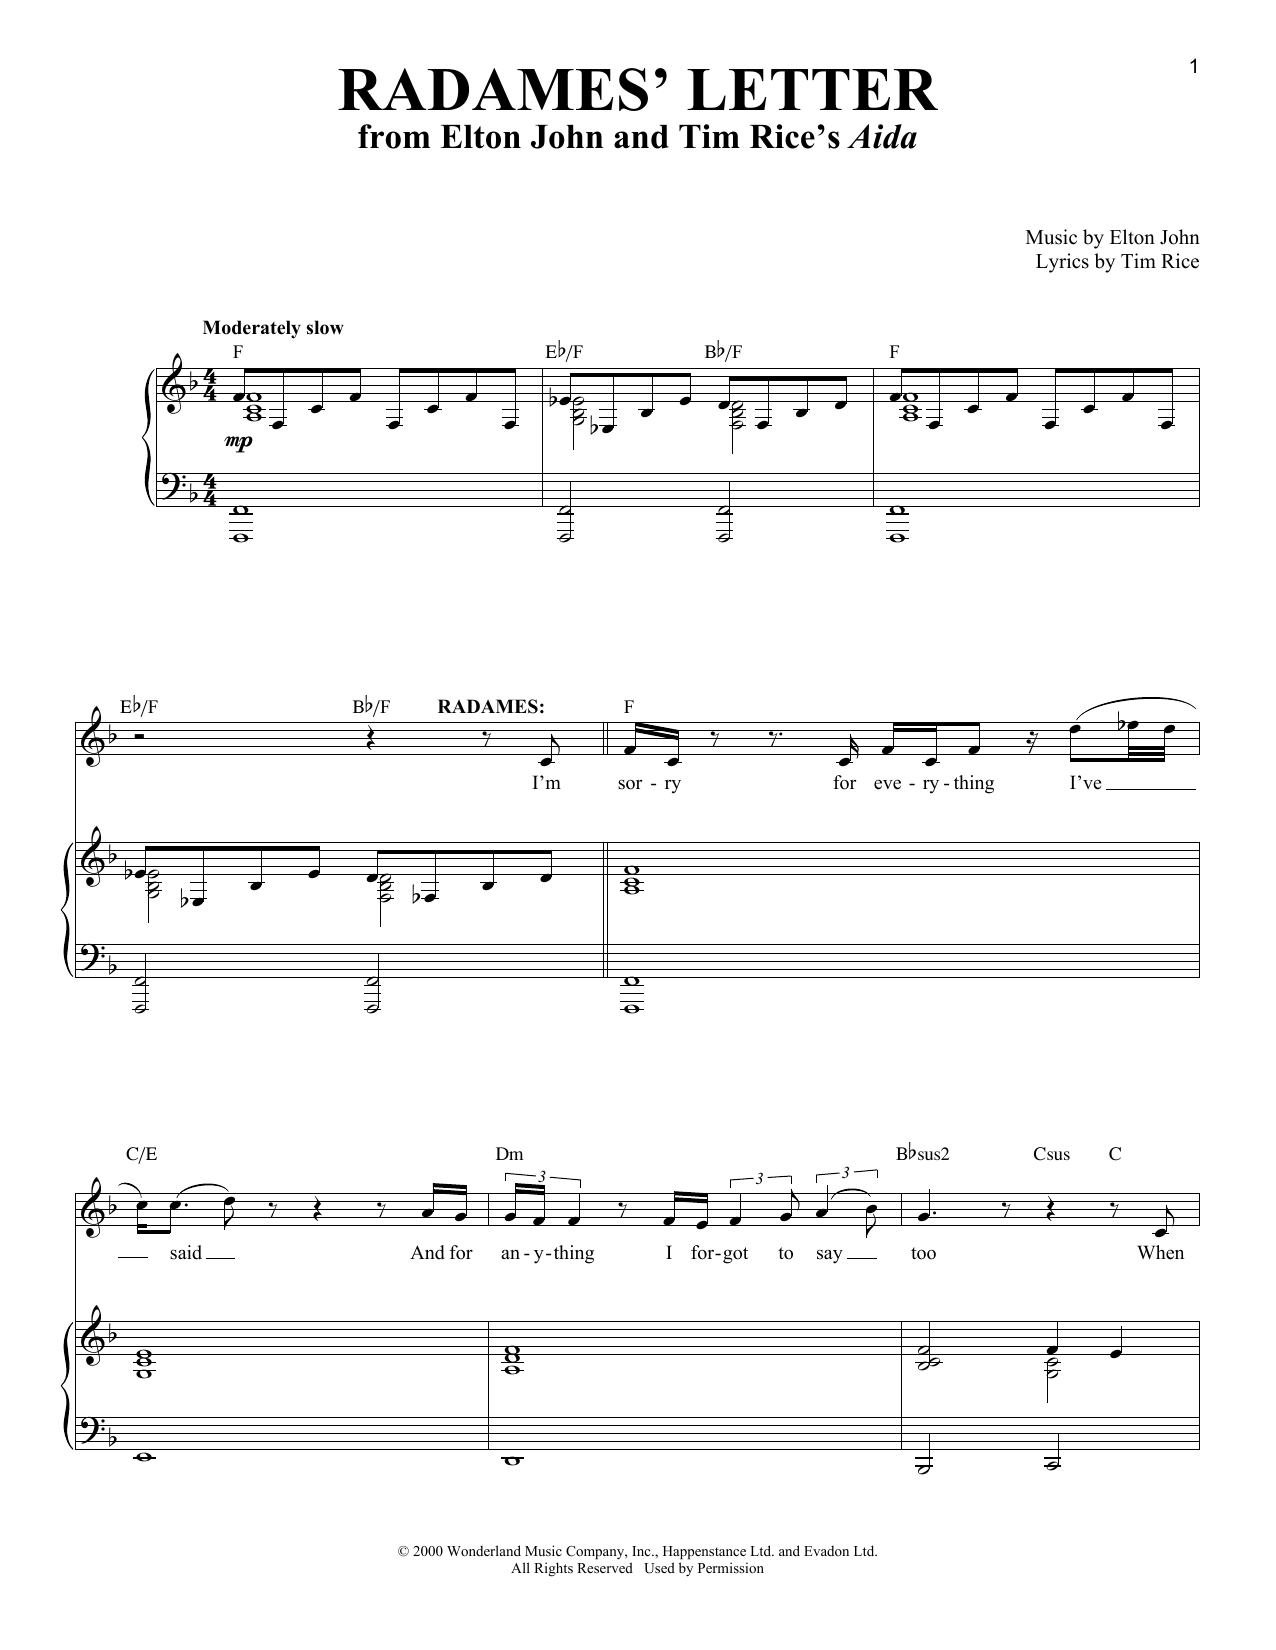 Elton John Radames' Letter Sheet Music Notes & Chords for Piano & Vocal - Download or Print PDF